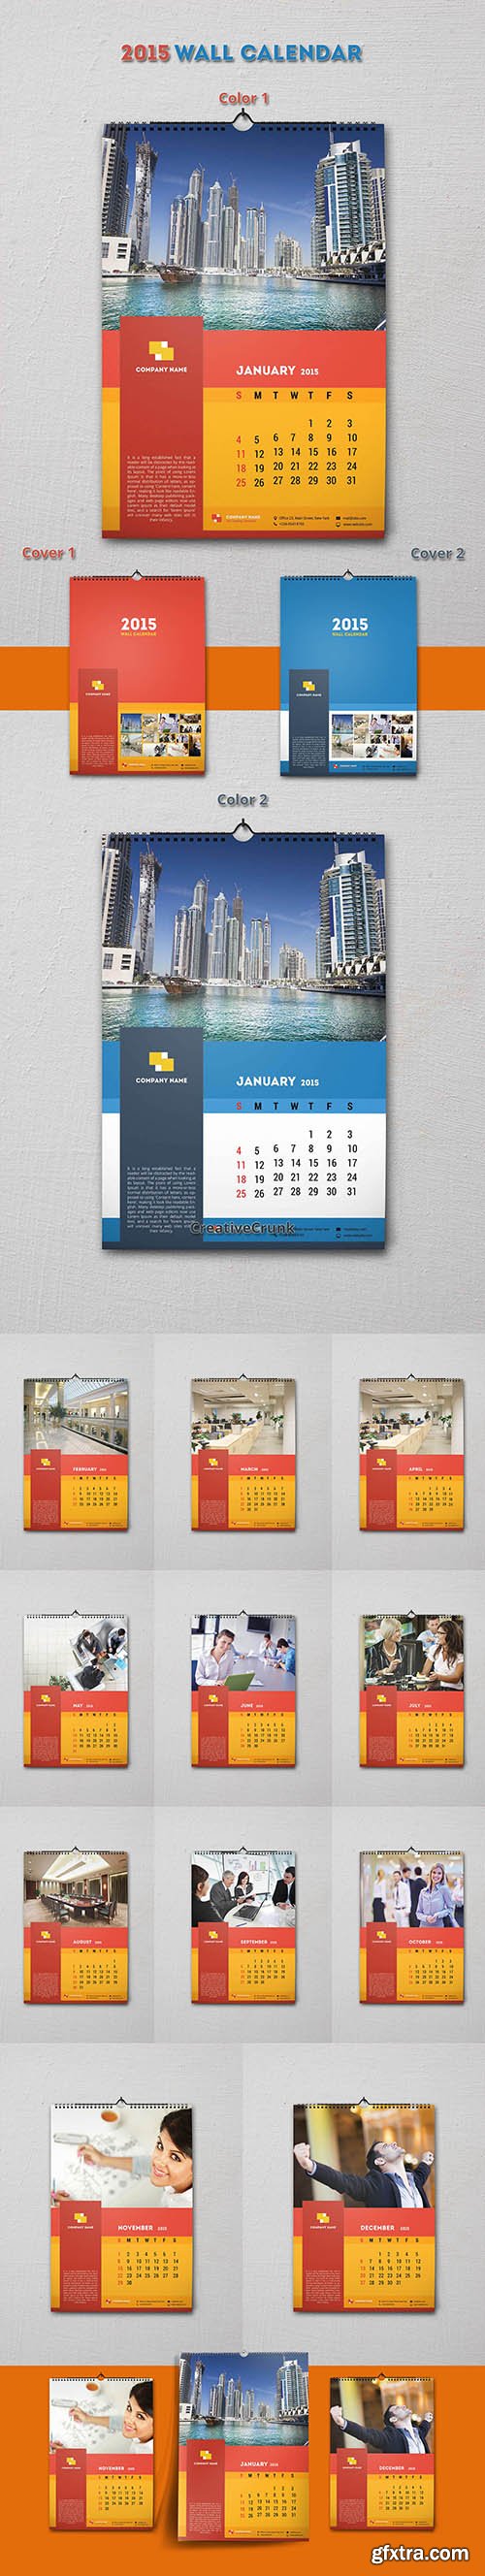 PSD Sources - 2015 Wall Calendar - Print Ready